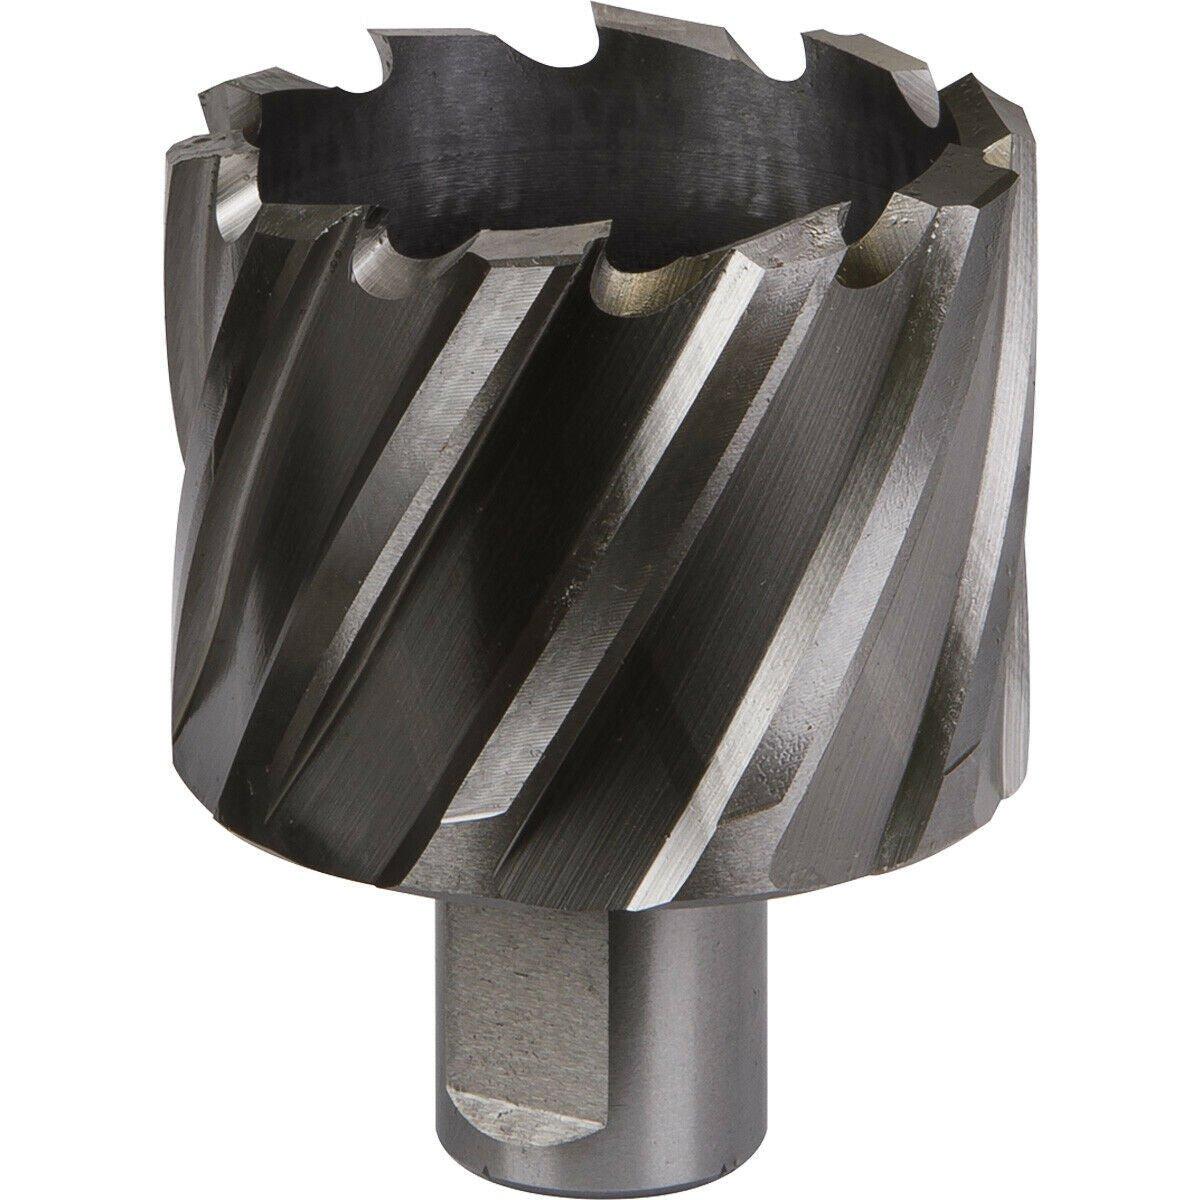 49mm x 25mm Depth Rotabor Cutter - M2 Steel Annular Metal Core Drill 19mm Shank